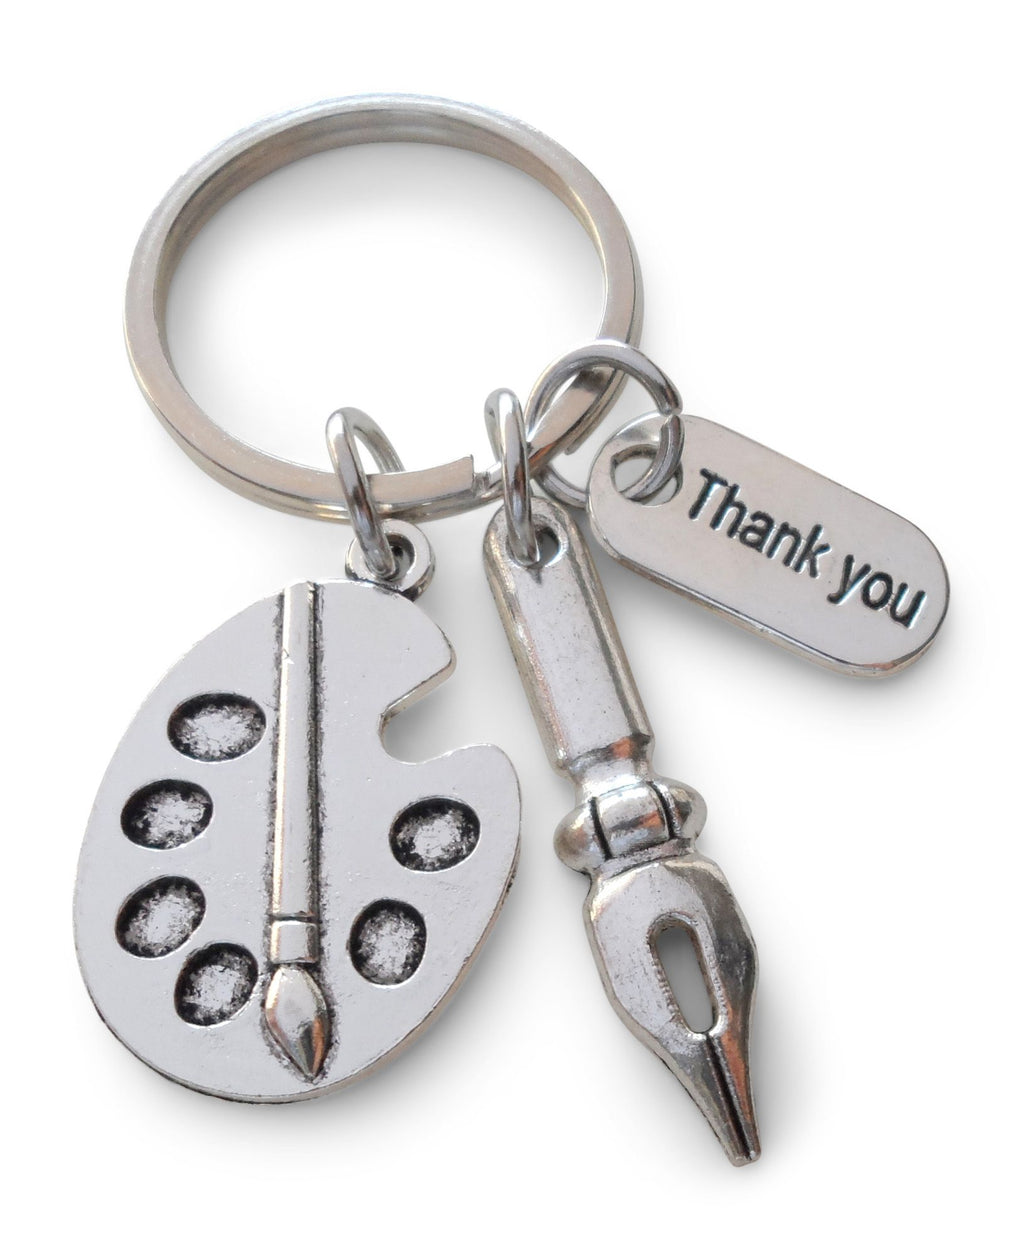 Art Palette Charm Keychain with Calligraphy Pen Charm, & "Thank You" Tag Charm, Art Teacher Keychain